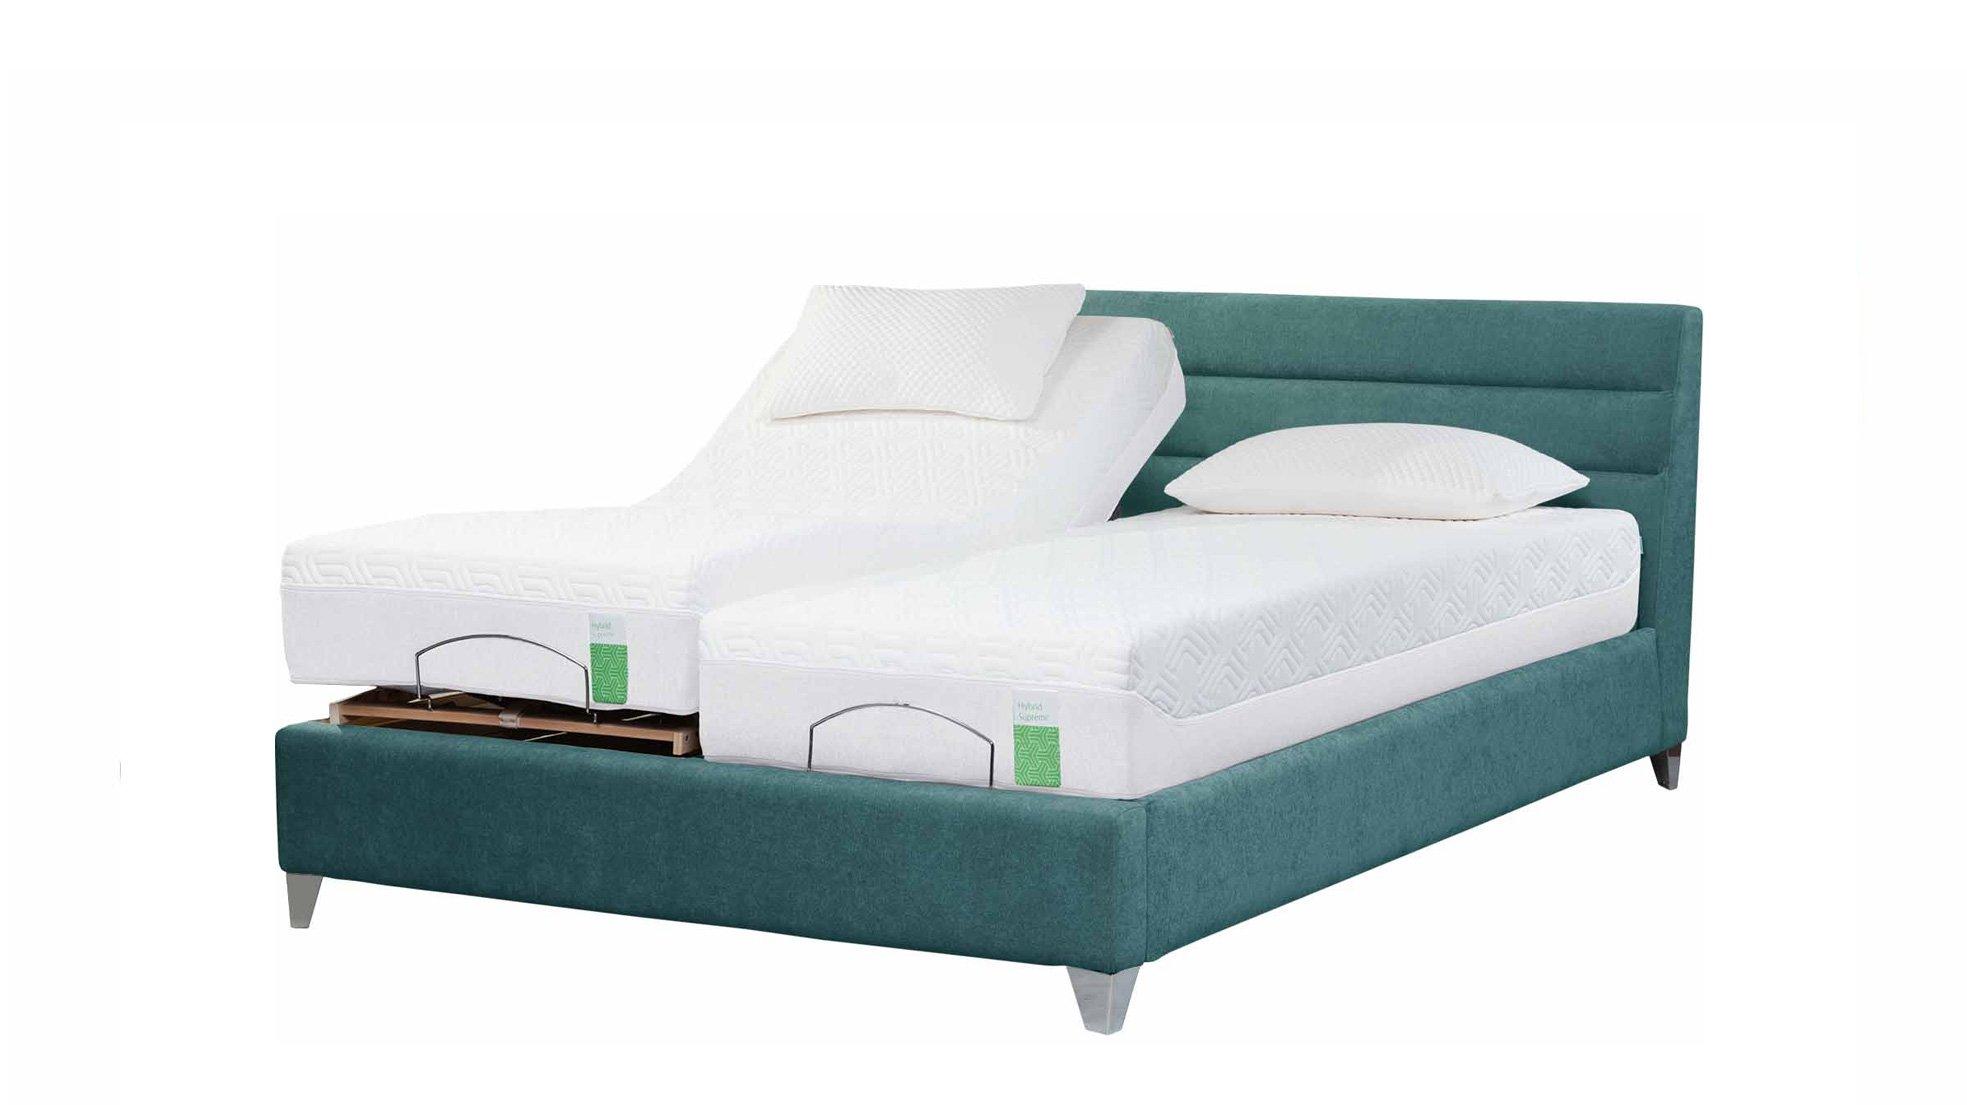 TEMPUR® Genoa Adjustable Massage Bedstead (King Size)